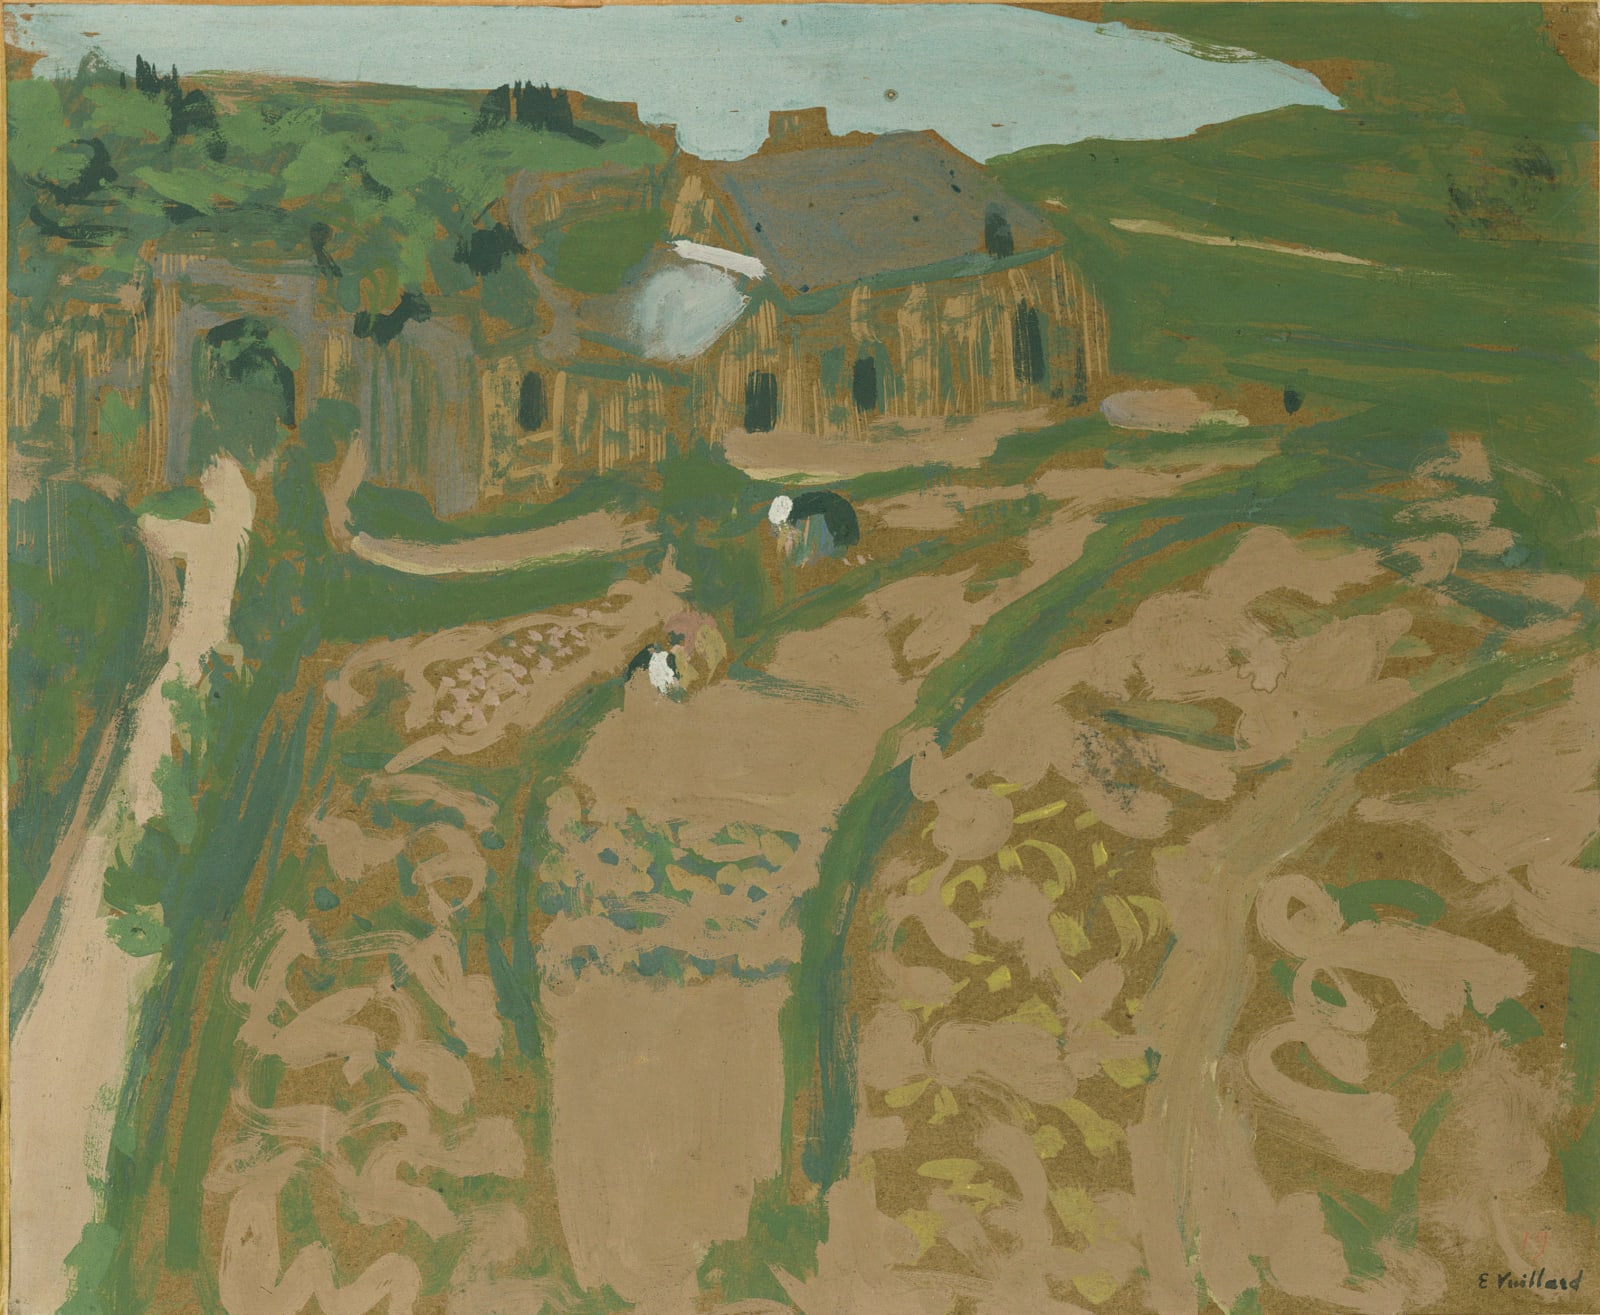 EDOUARD VUILLARD, En Bretagne, Saint-Jacut, painted in 1909